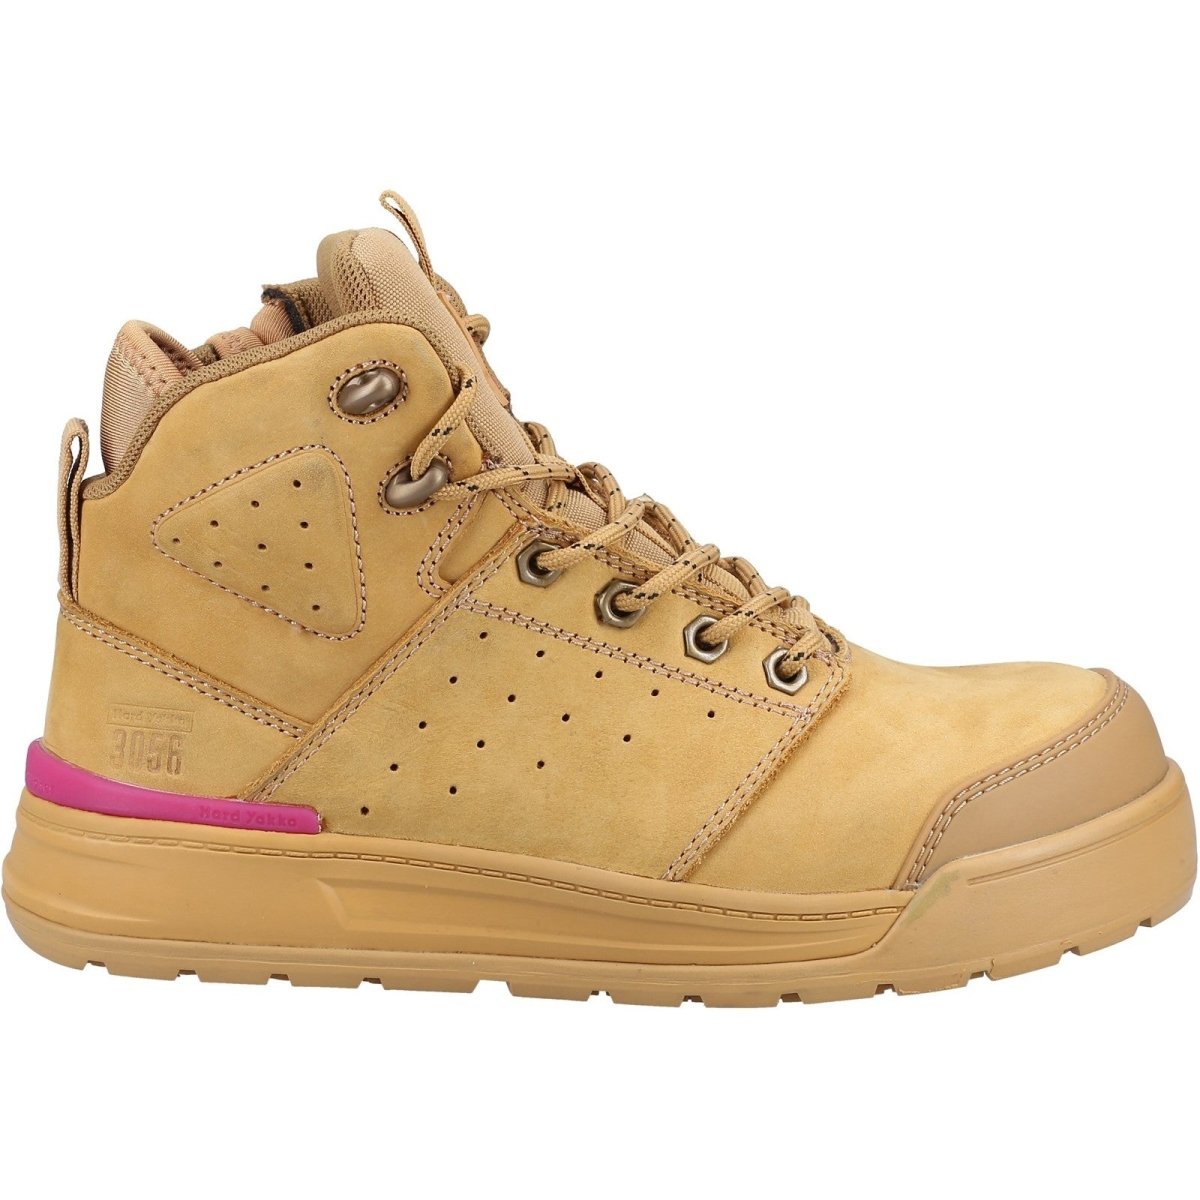 Hard Yakka 3056 PR Ladies Side-Zip Composite Safety Boots - Shoe Store Direct